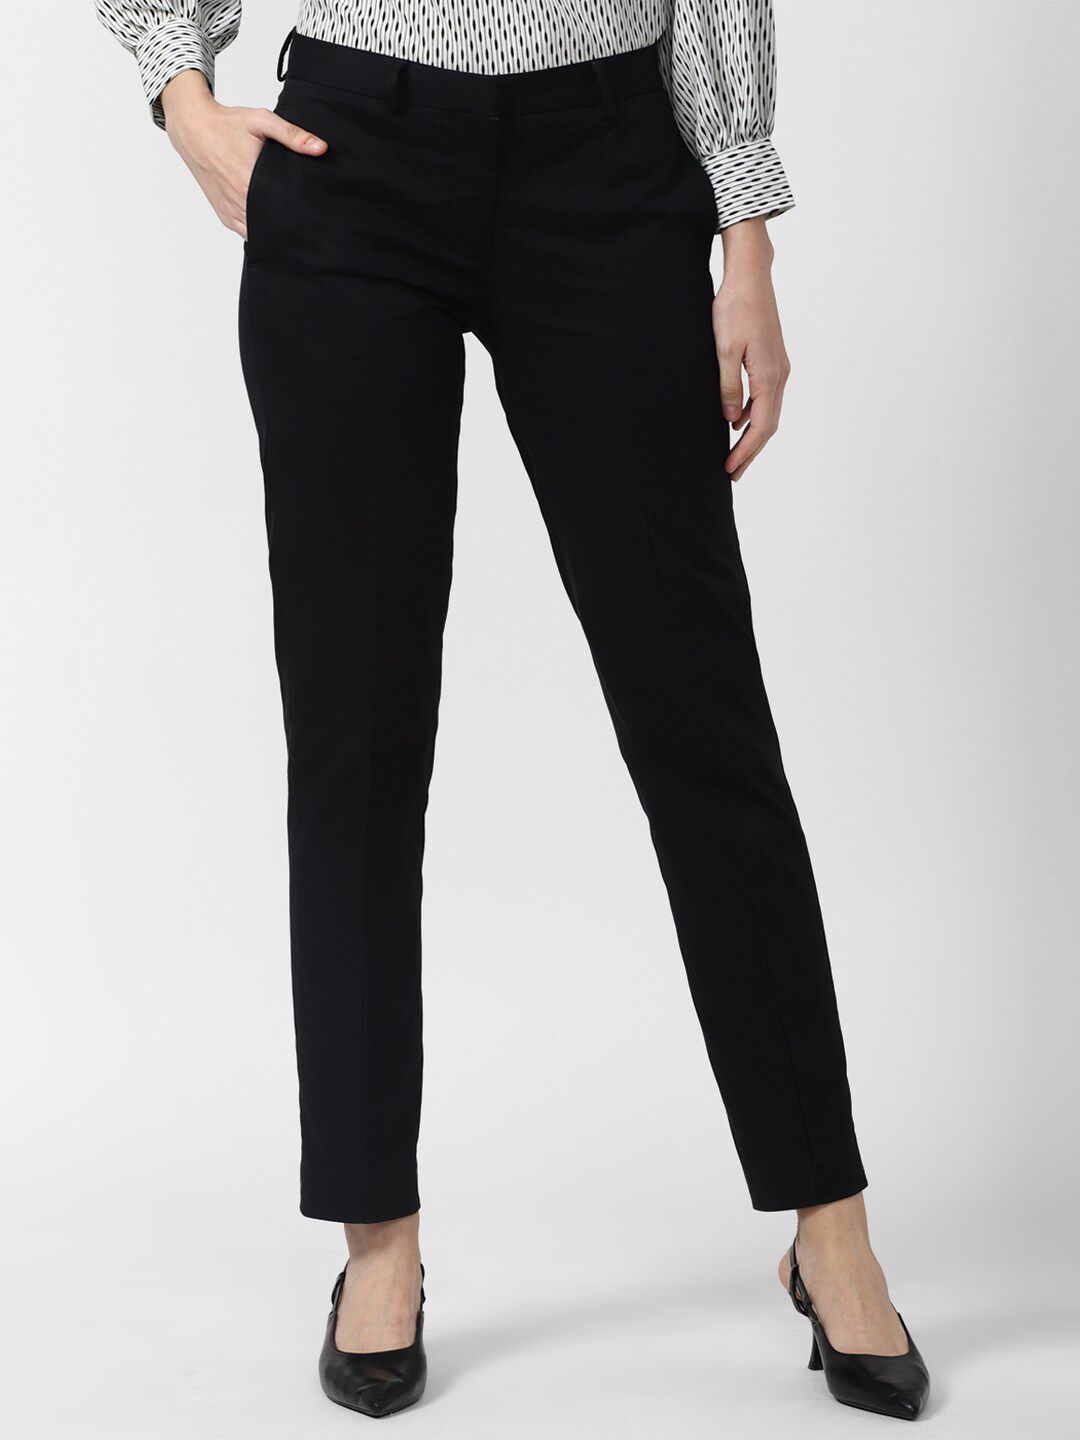 Van Heusen Woman Solid Black Trousers Price in India